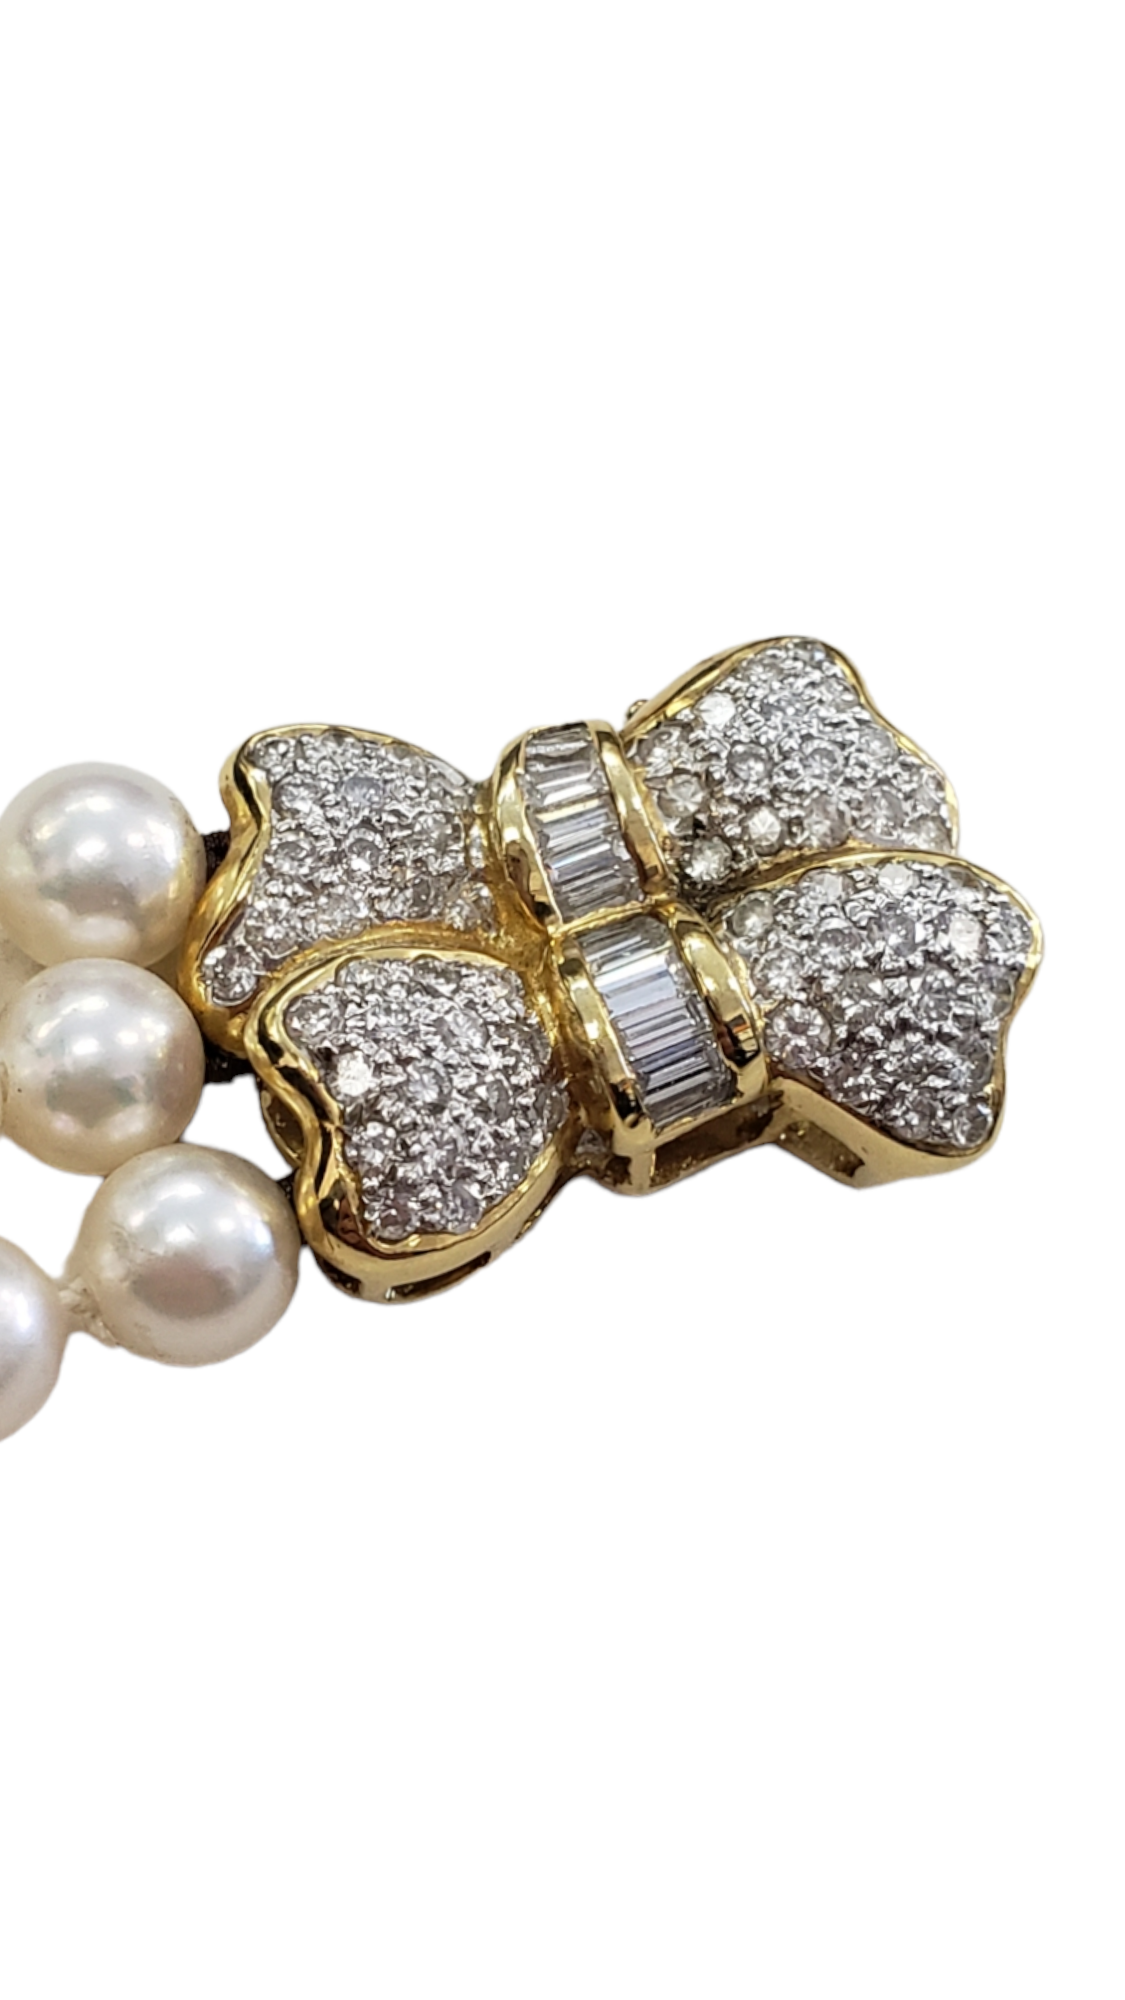 Cultured Triple Strand Pearl Bracelet w/ Diamond Bow Clasp made in 18-Karat Yellow Gold